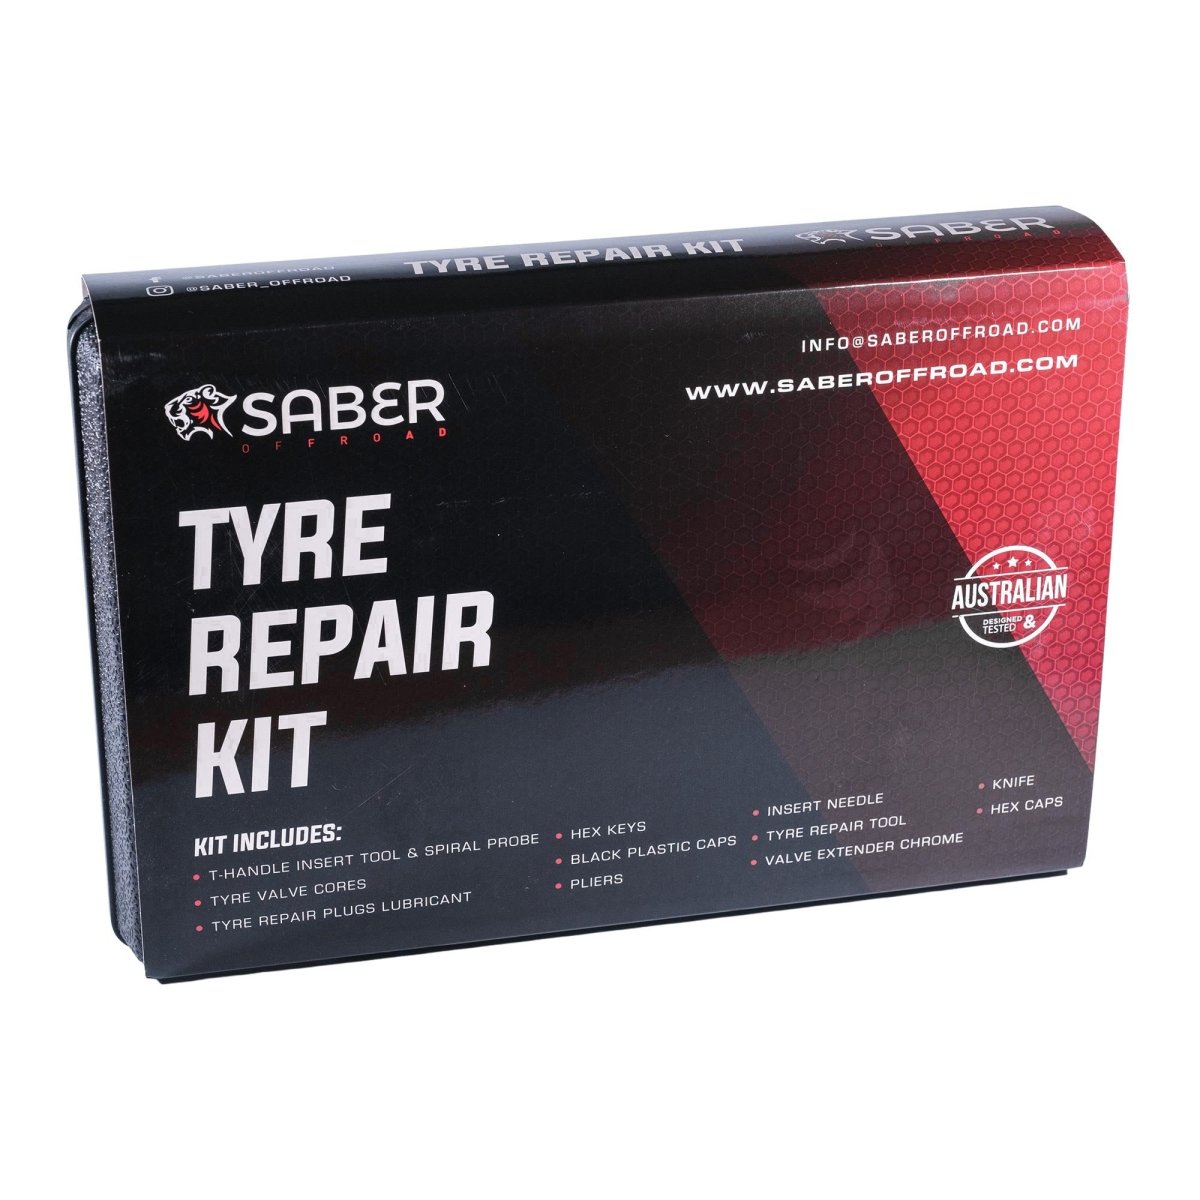 Saber Tyre Repair Kit | Saber Offroad | A247 Gear